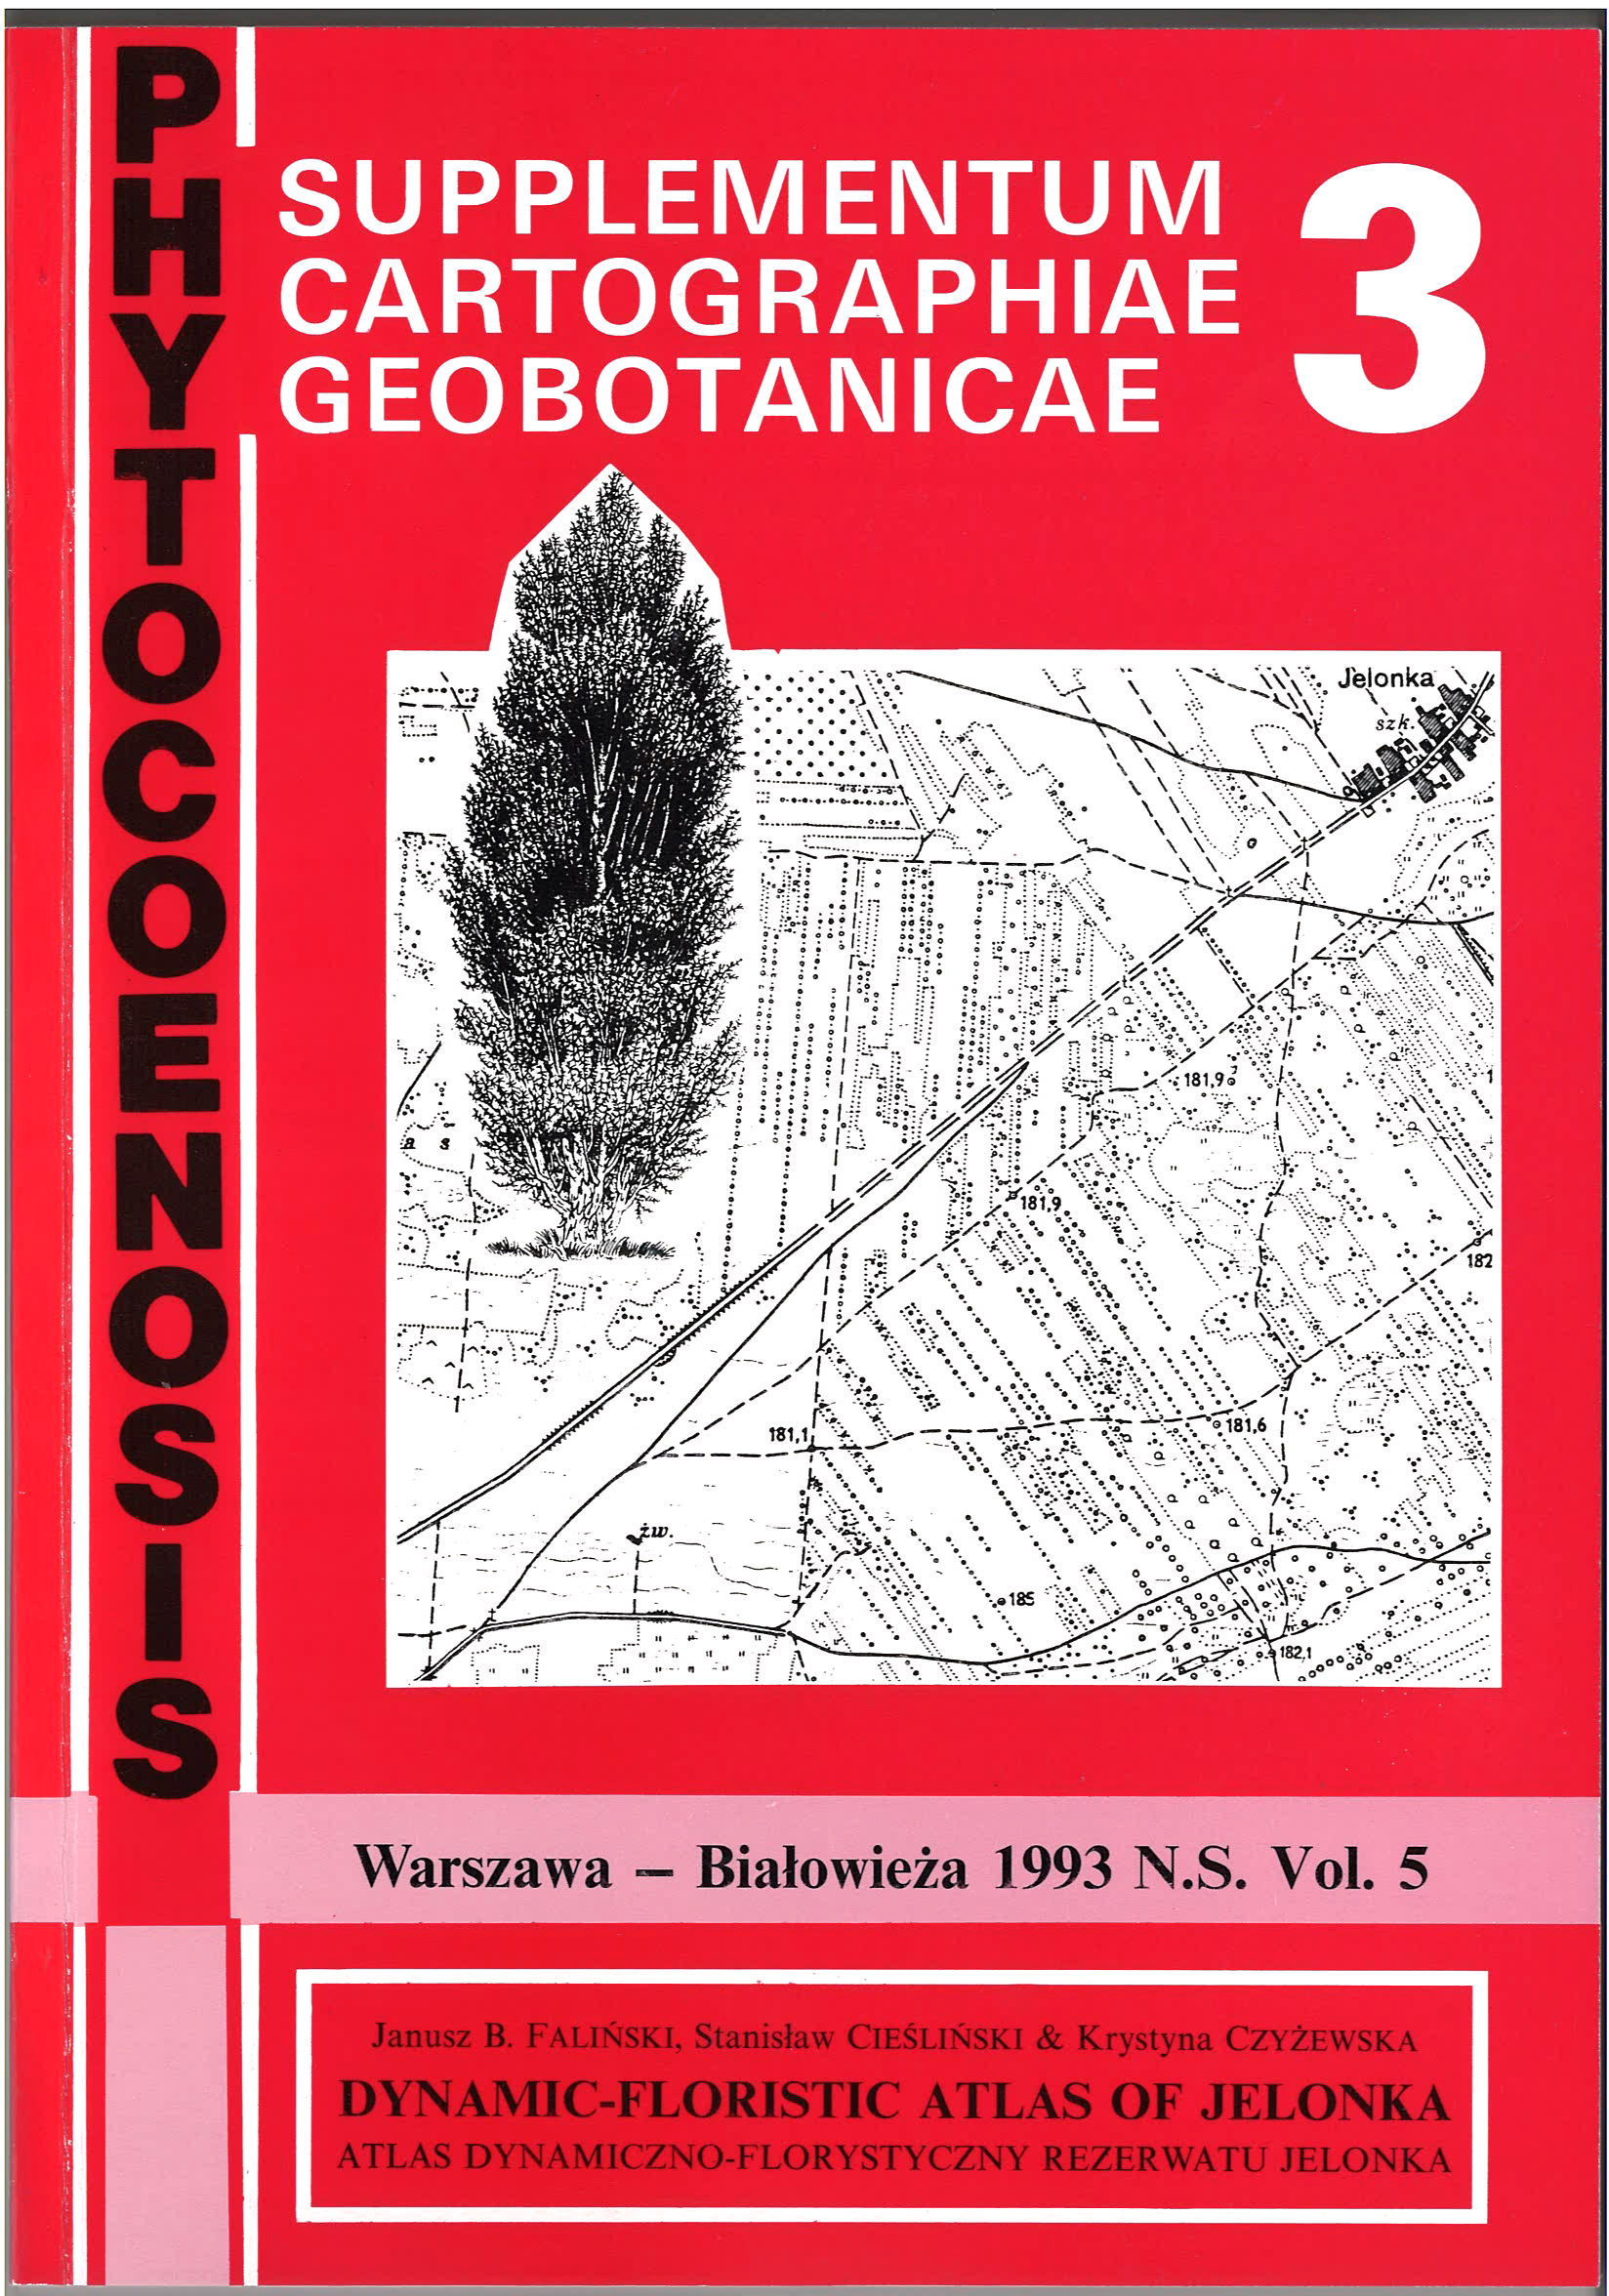 Phytocoenosis (N.S.) 5, Supplementum Cartographiae Geobotanicae 3